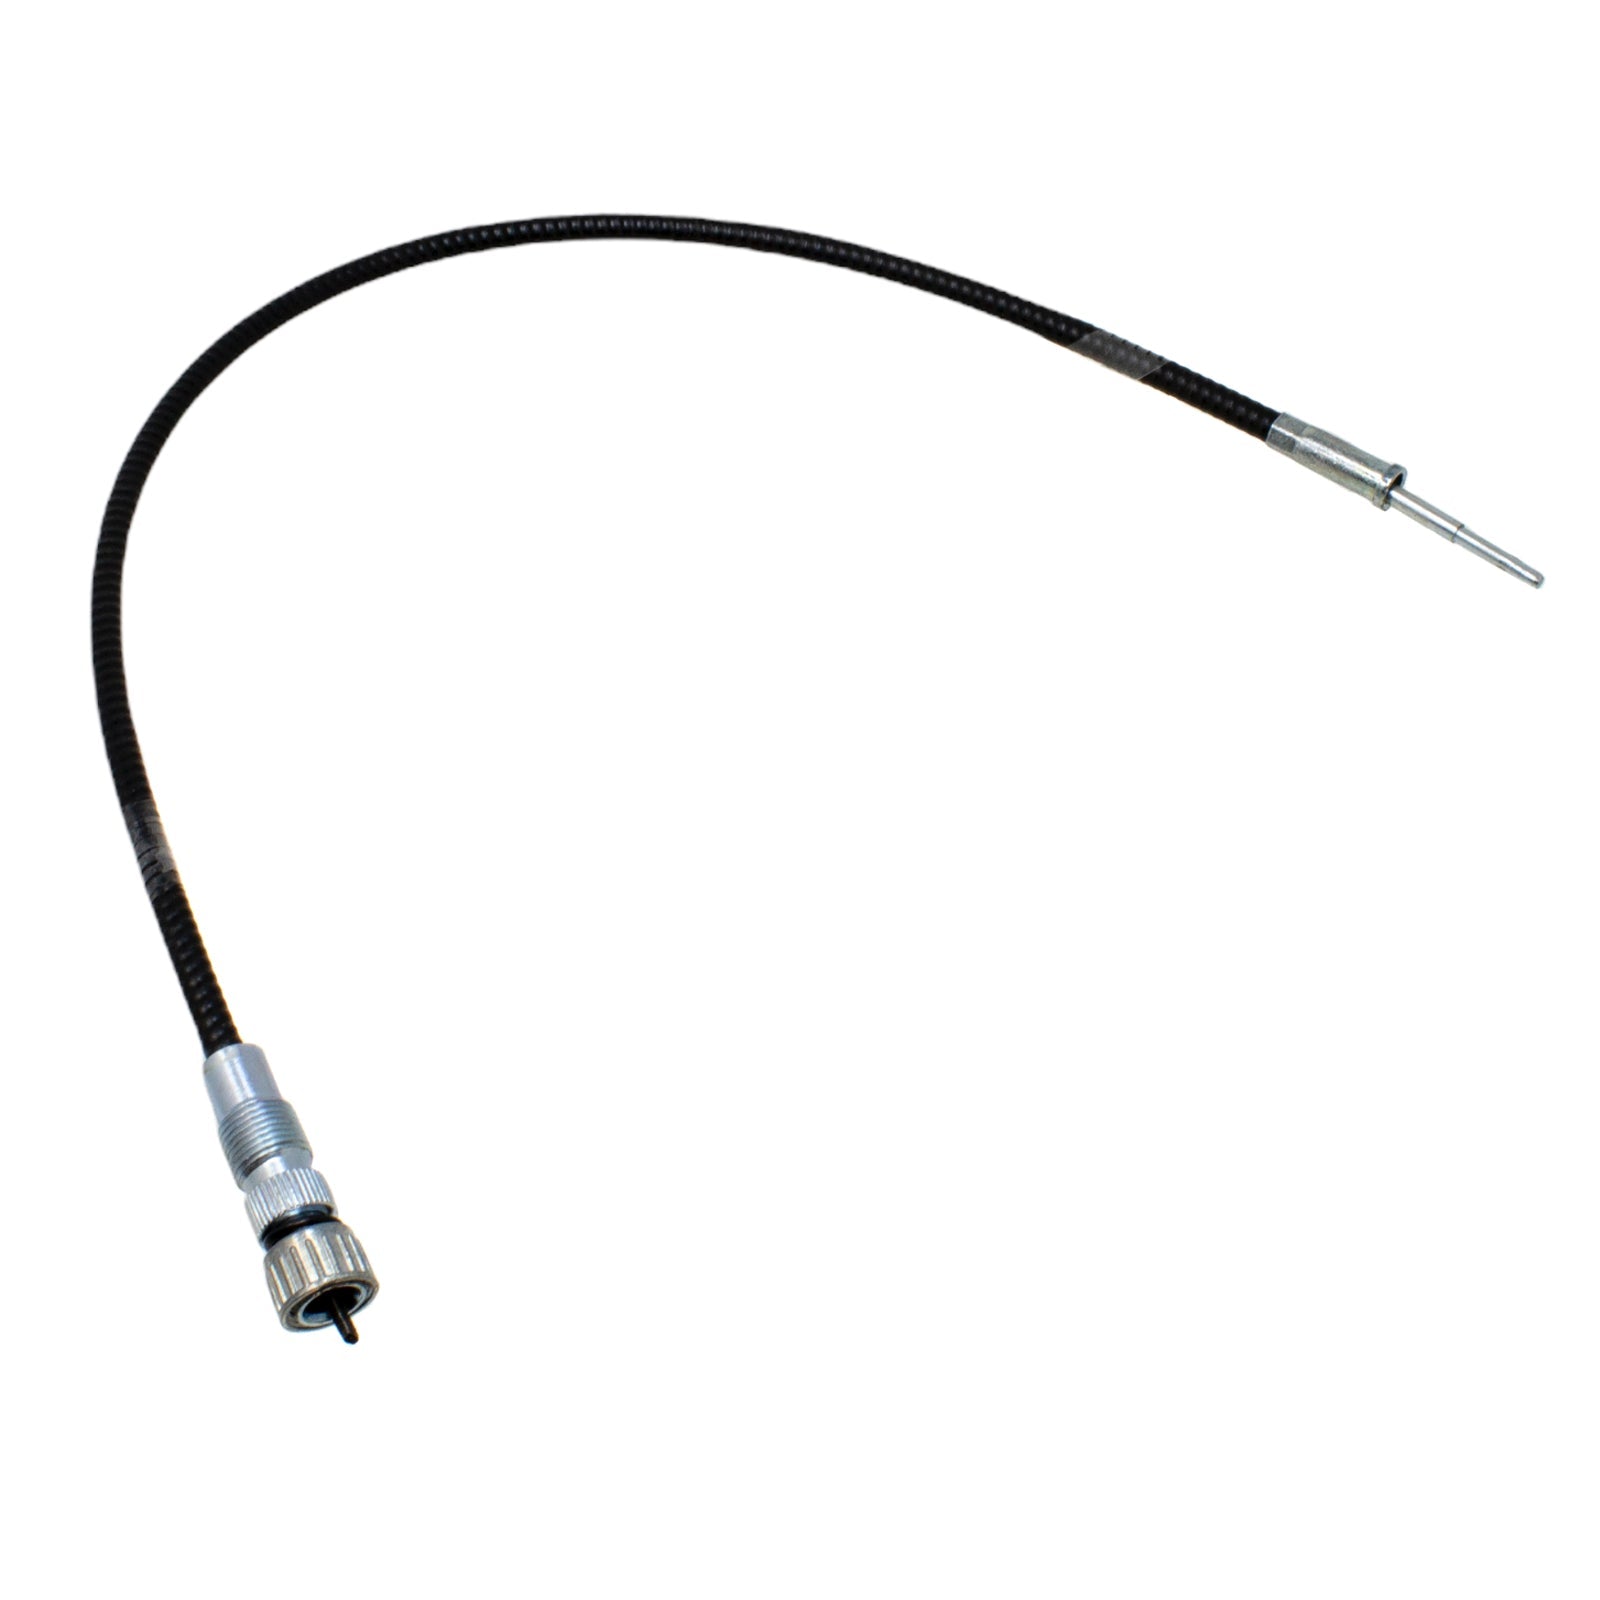 Duraforce AL23838, Tachometer Cable For John Deere